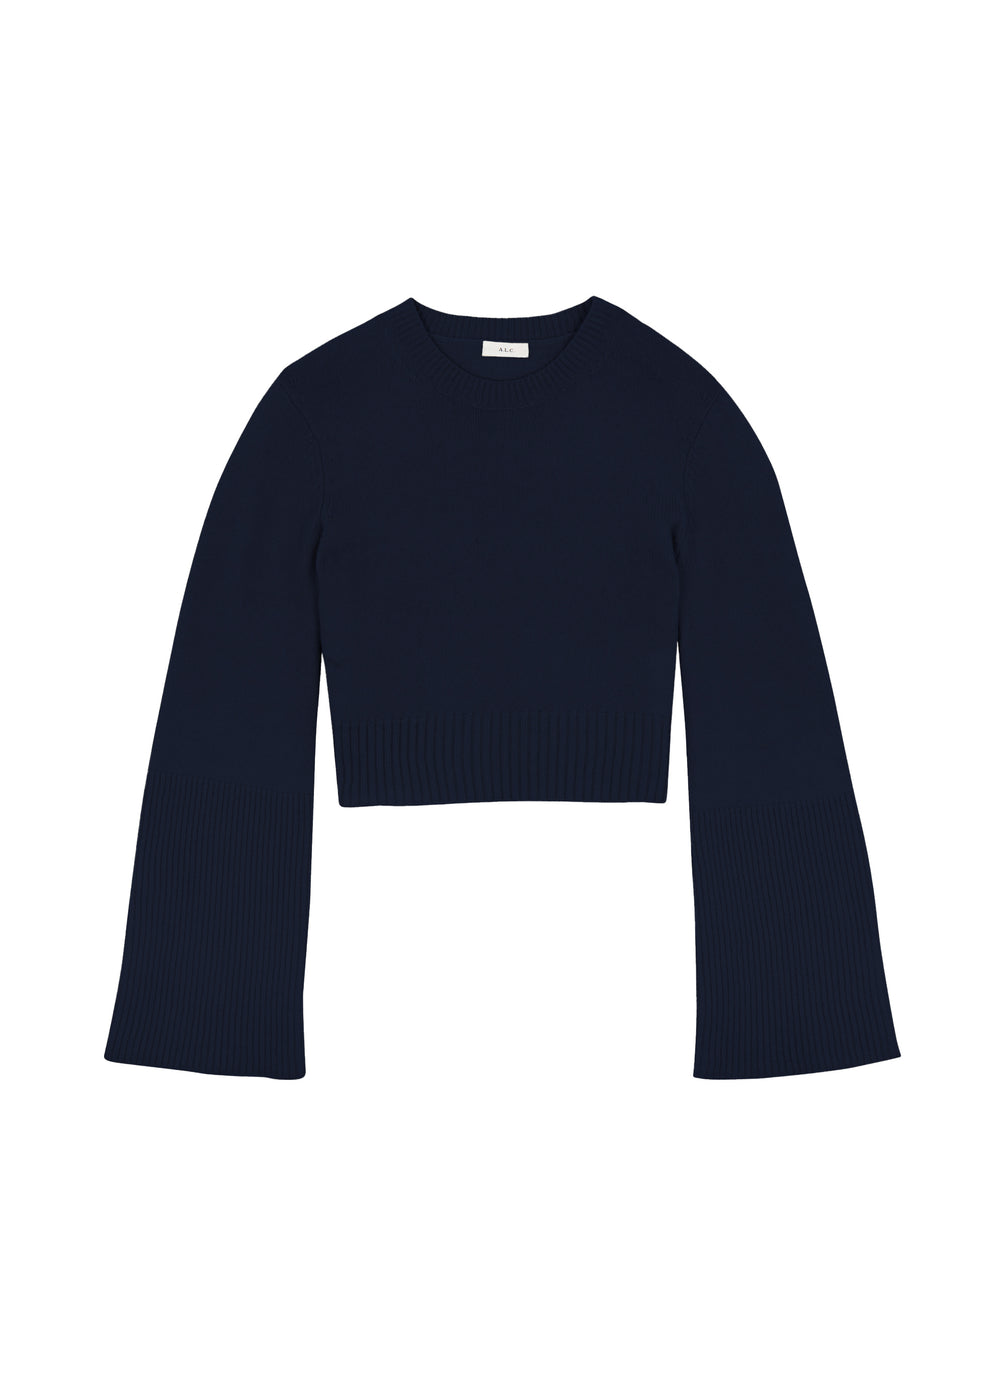 Clover Wool Sweater